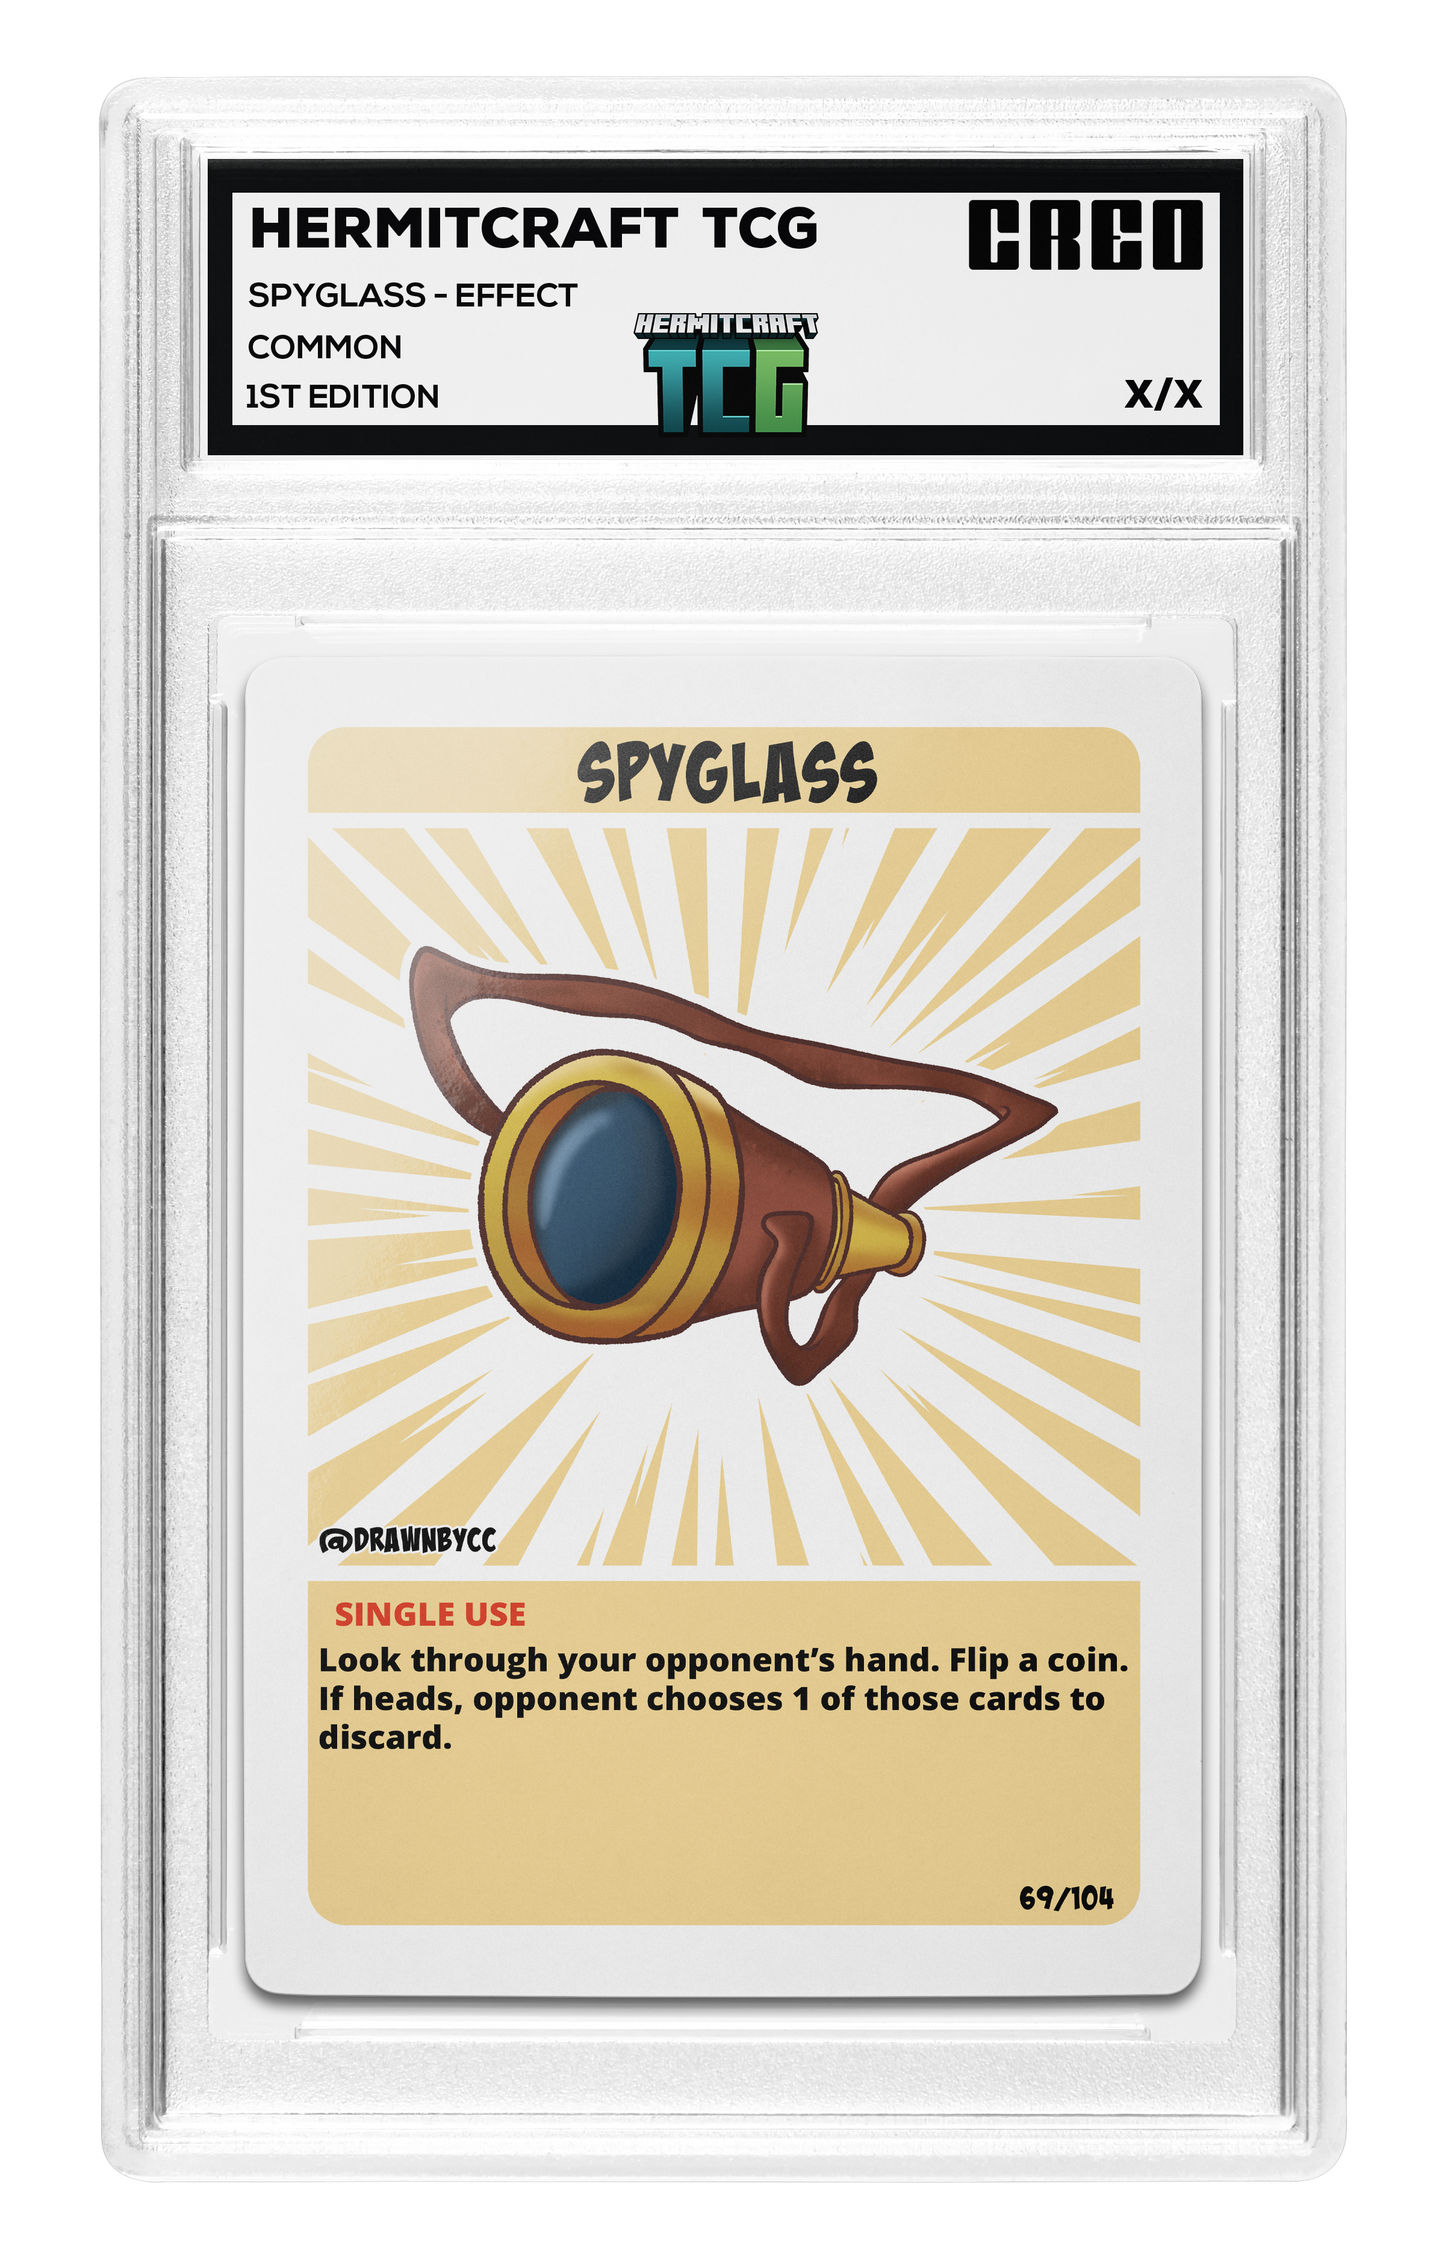 Spyglass - Effect